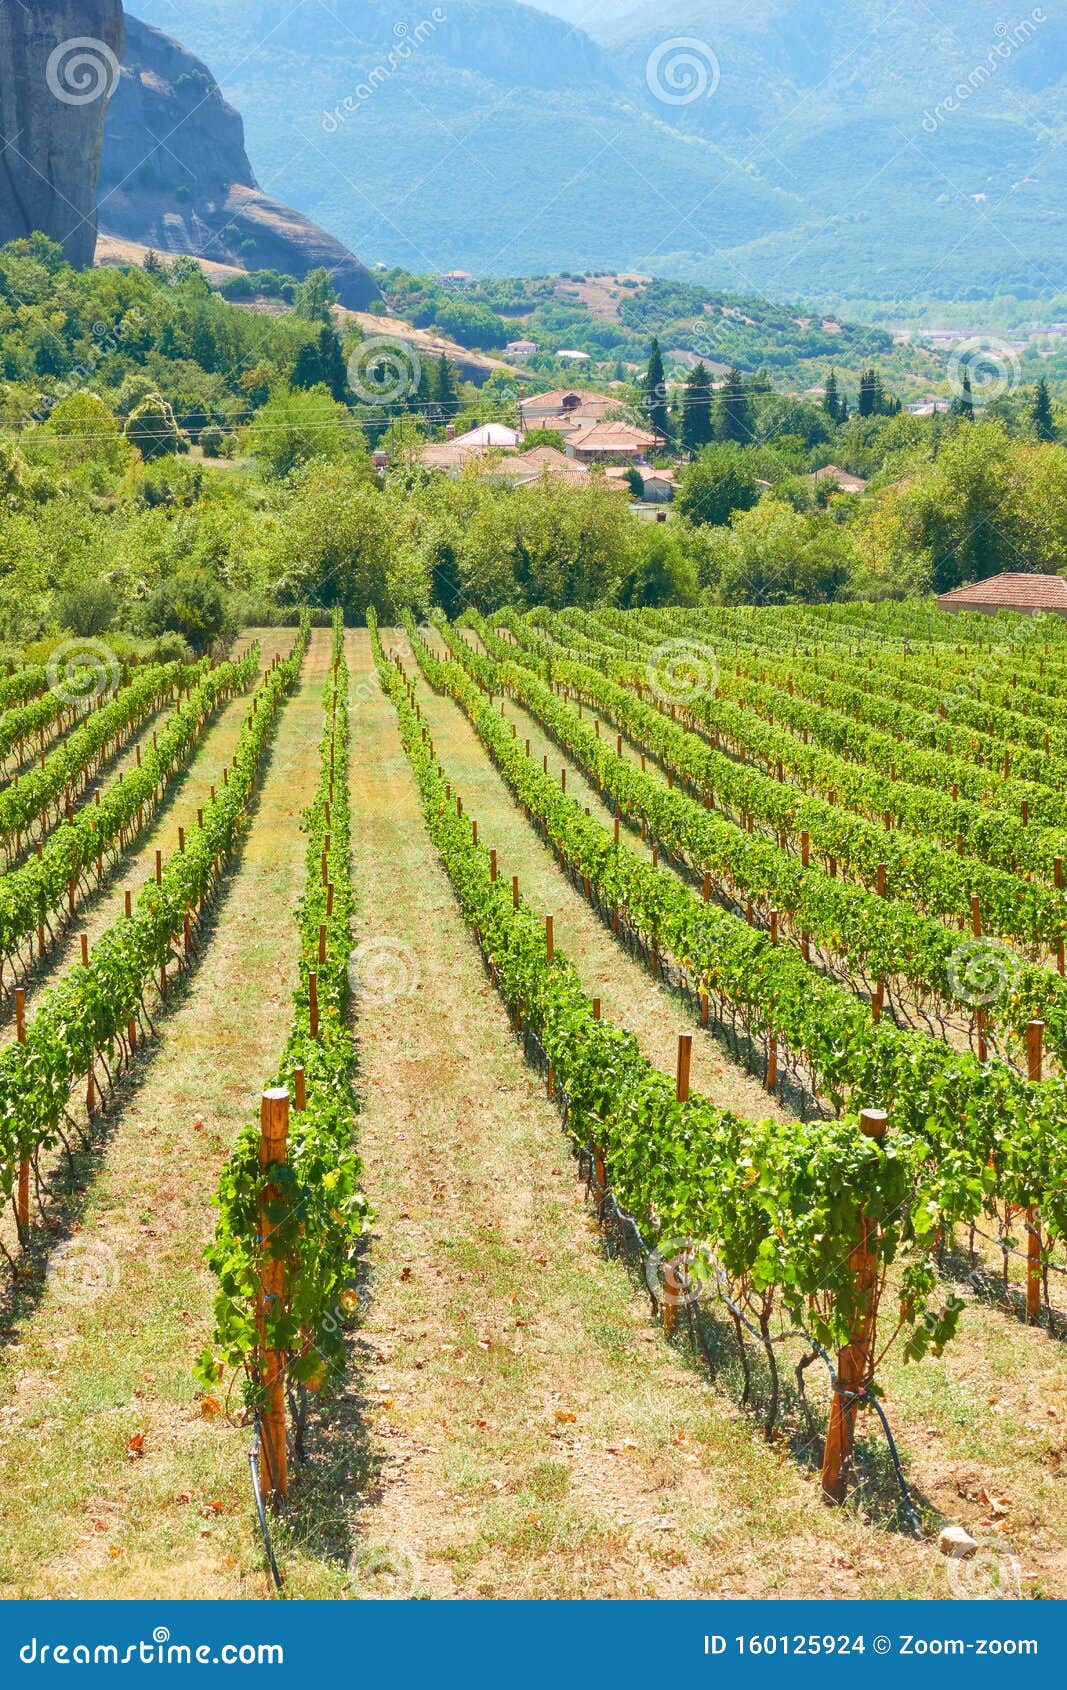 vineyard - rural landscpe